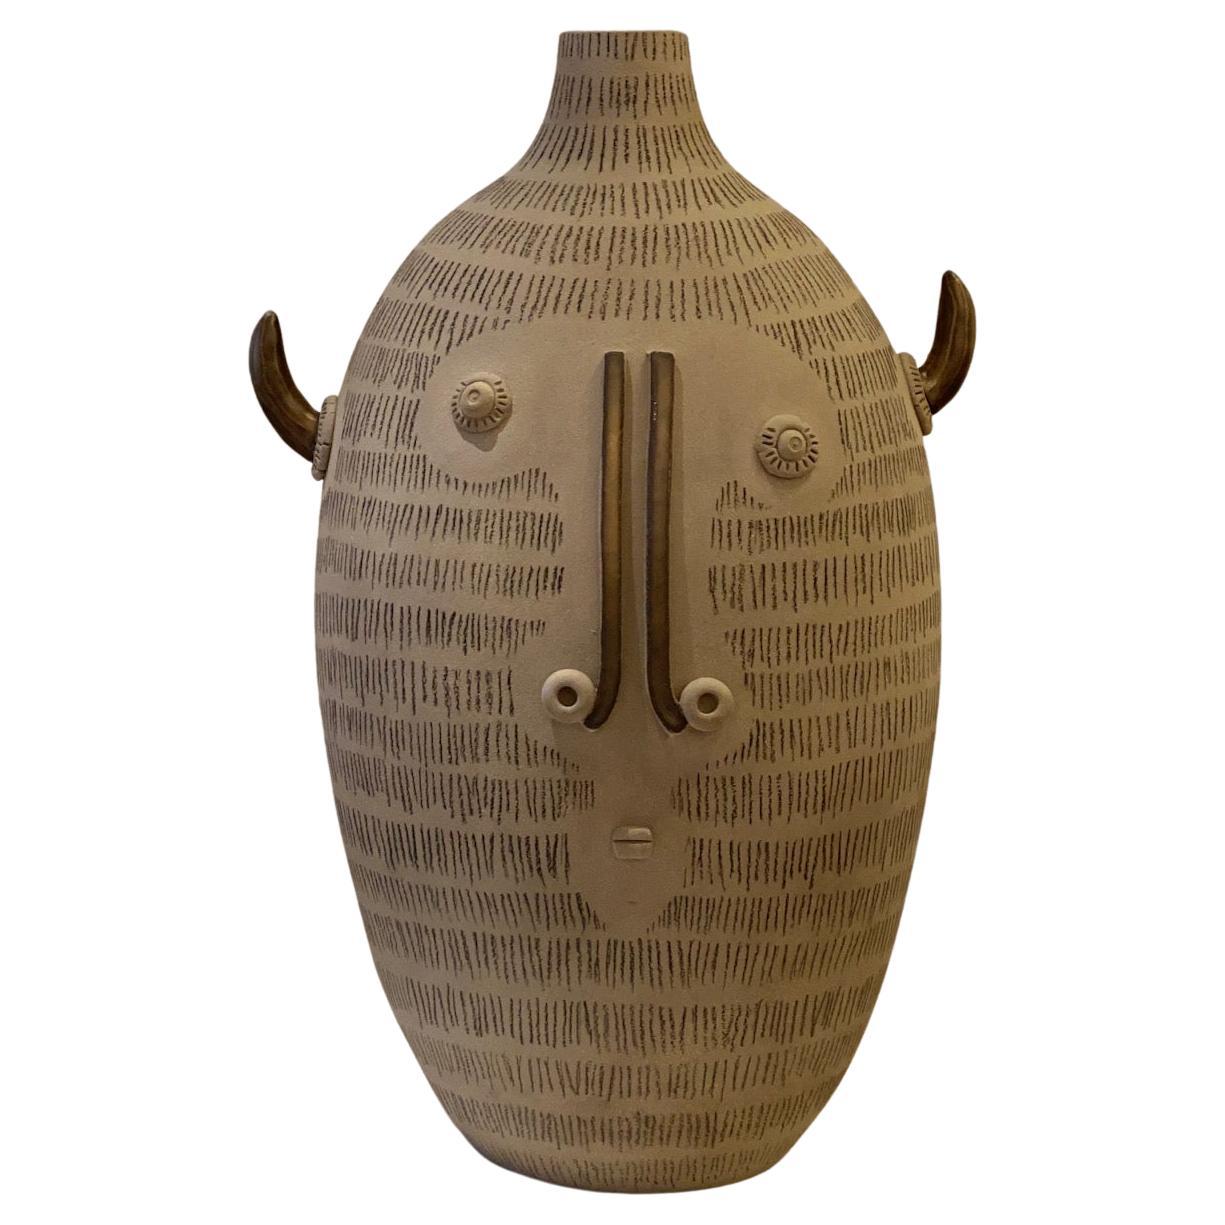 Large One of a Kind Ceramic Lamp Base or Sculpture Vase "Minotaure" Signed Dalo